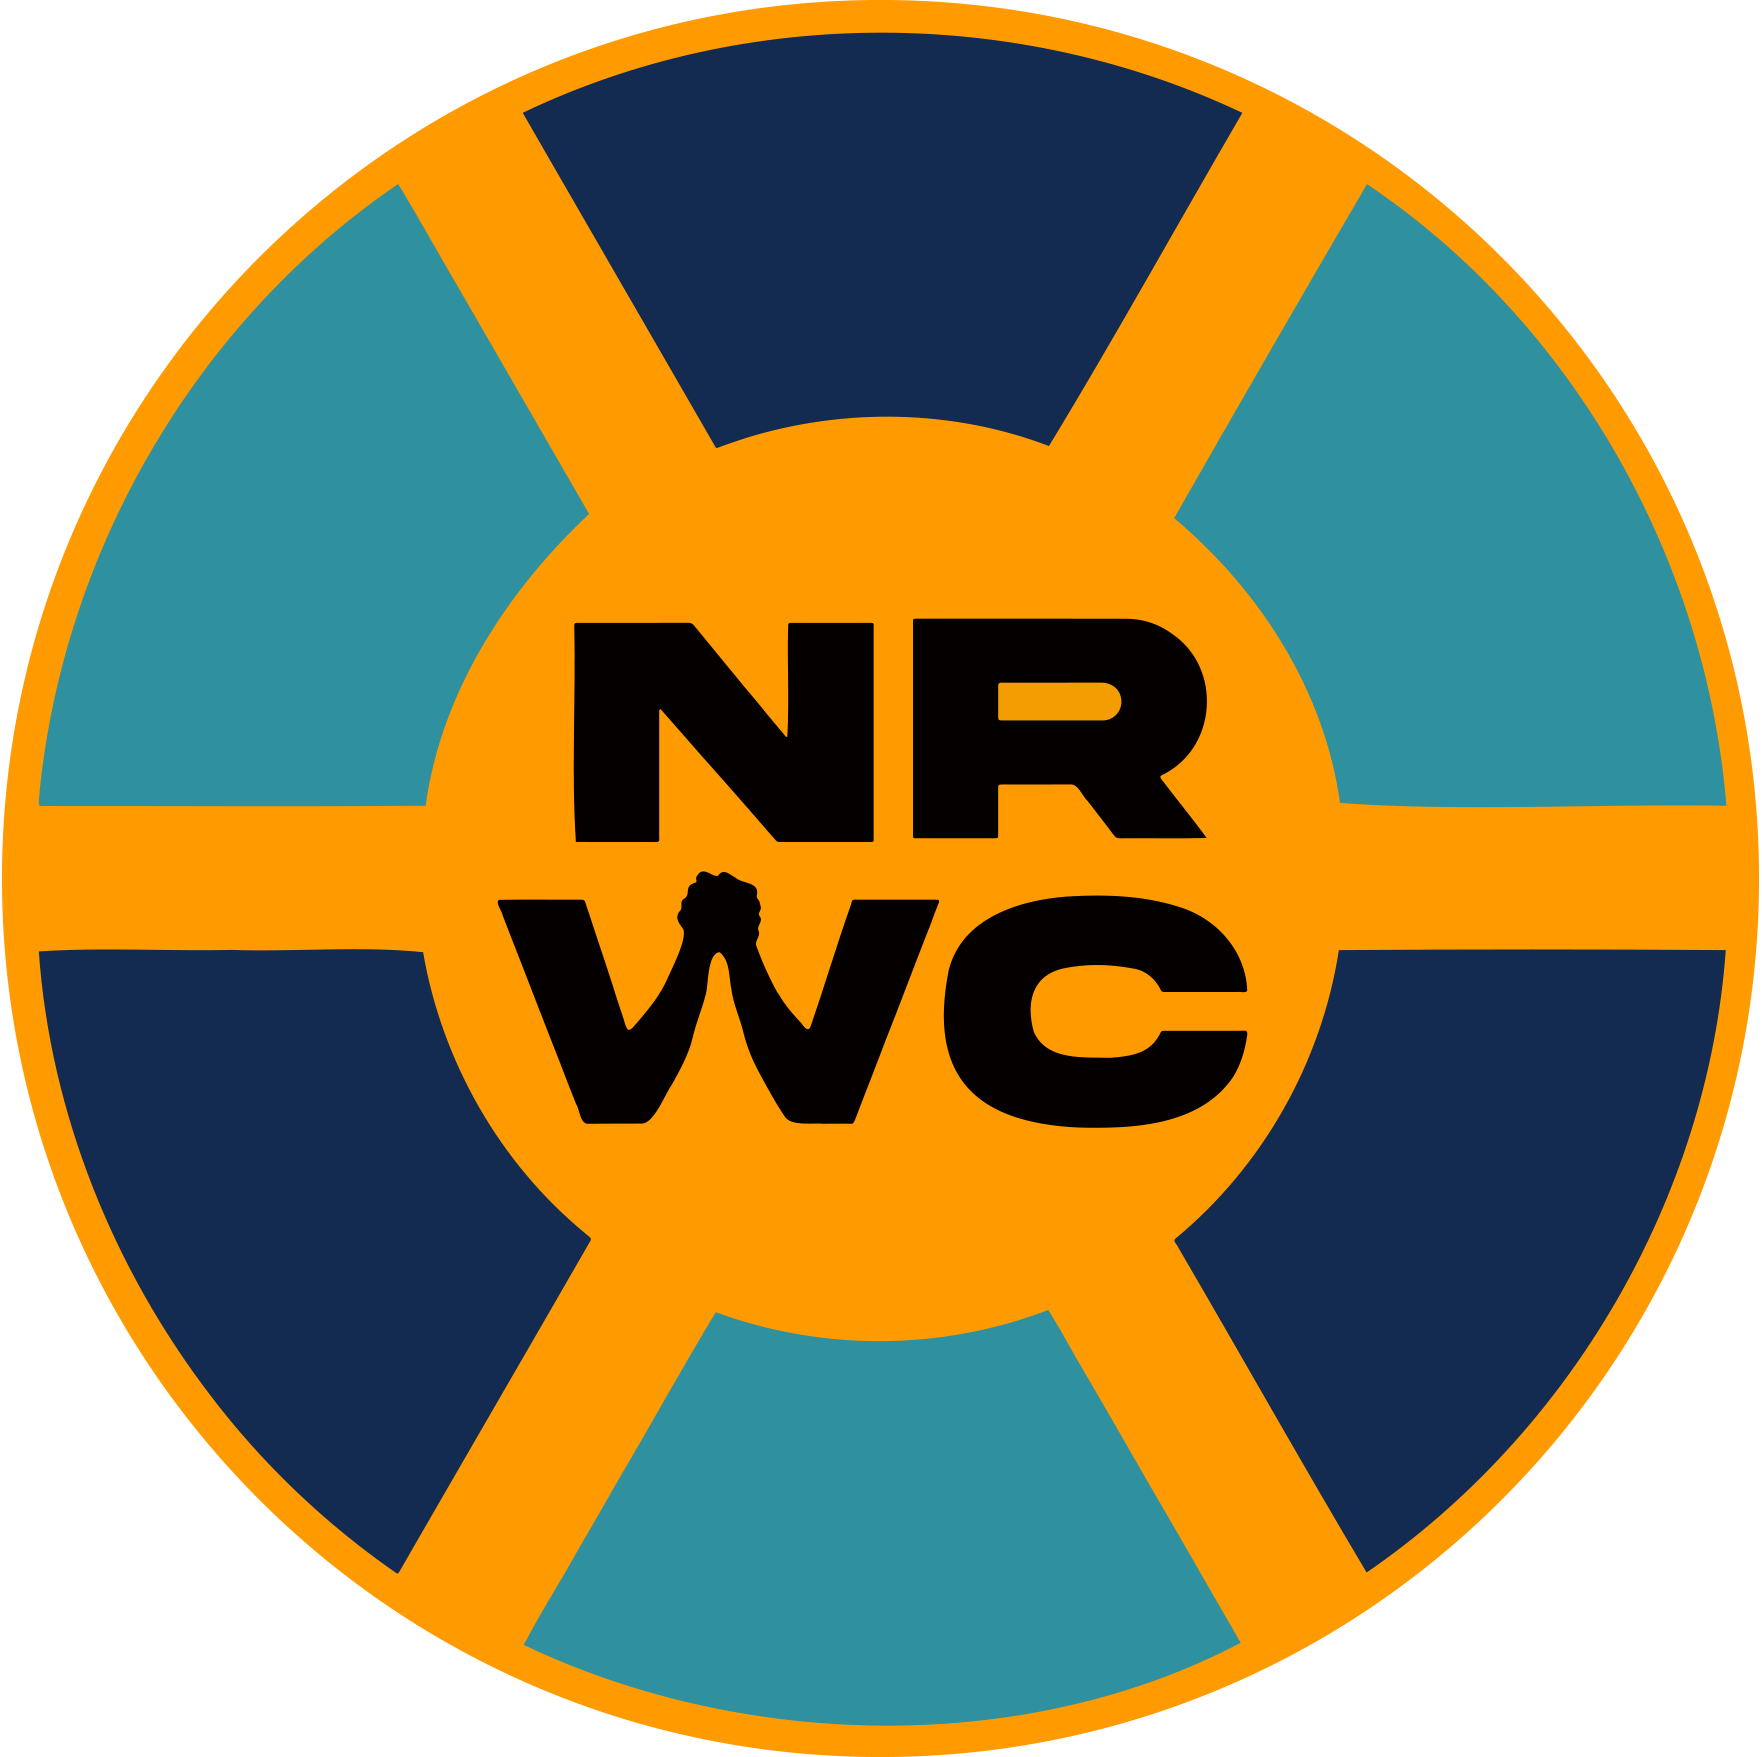 National Radioactive Waste Coalition